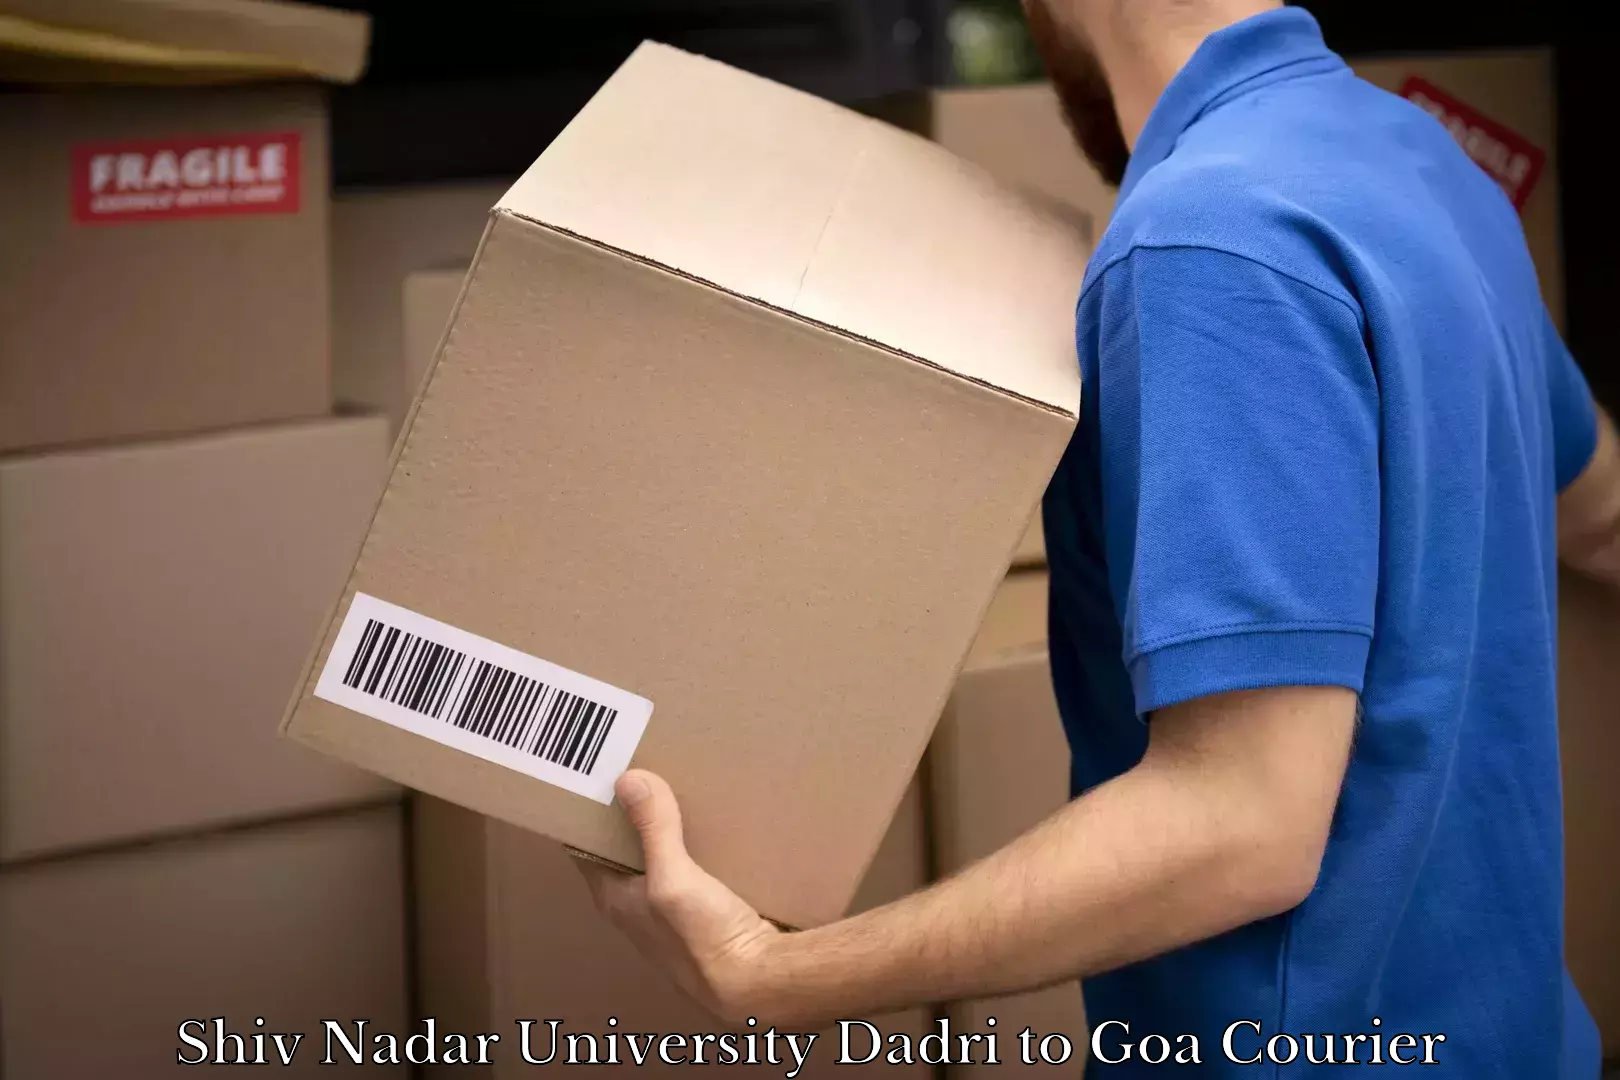 Affordable parcel service Shiv Nadar University Dadri to Goa